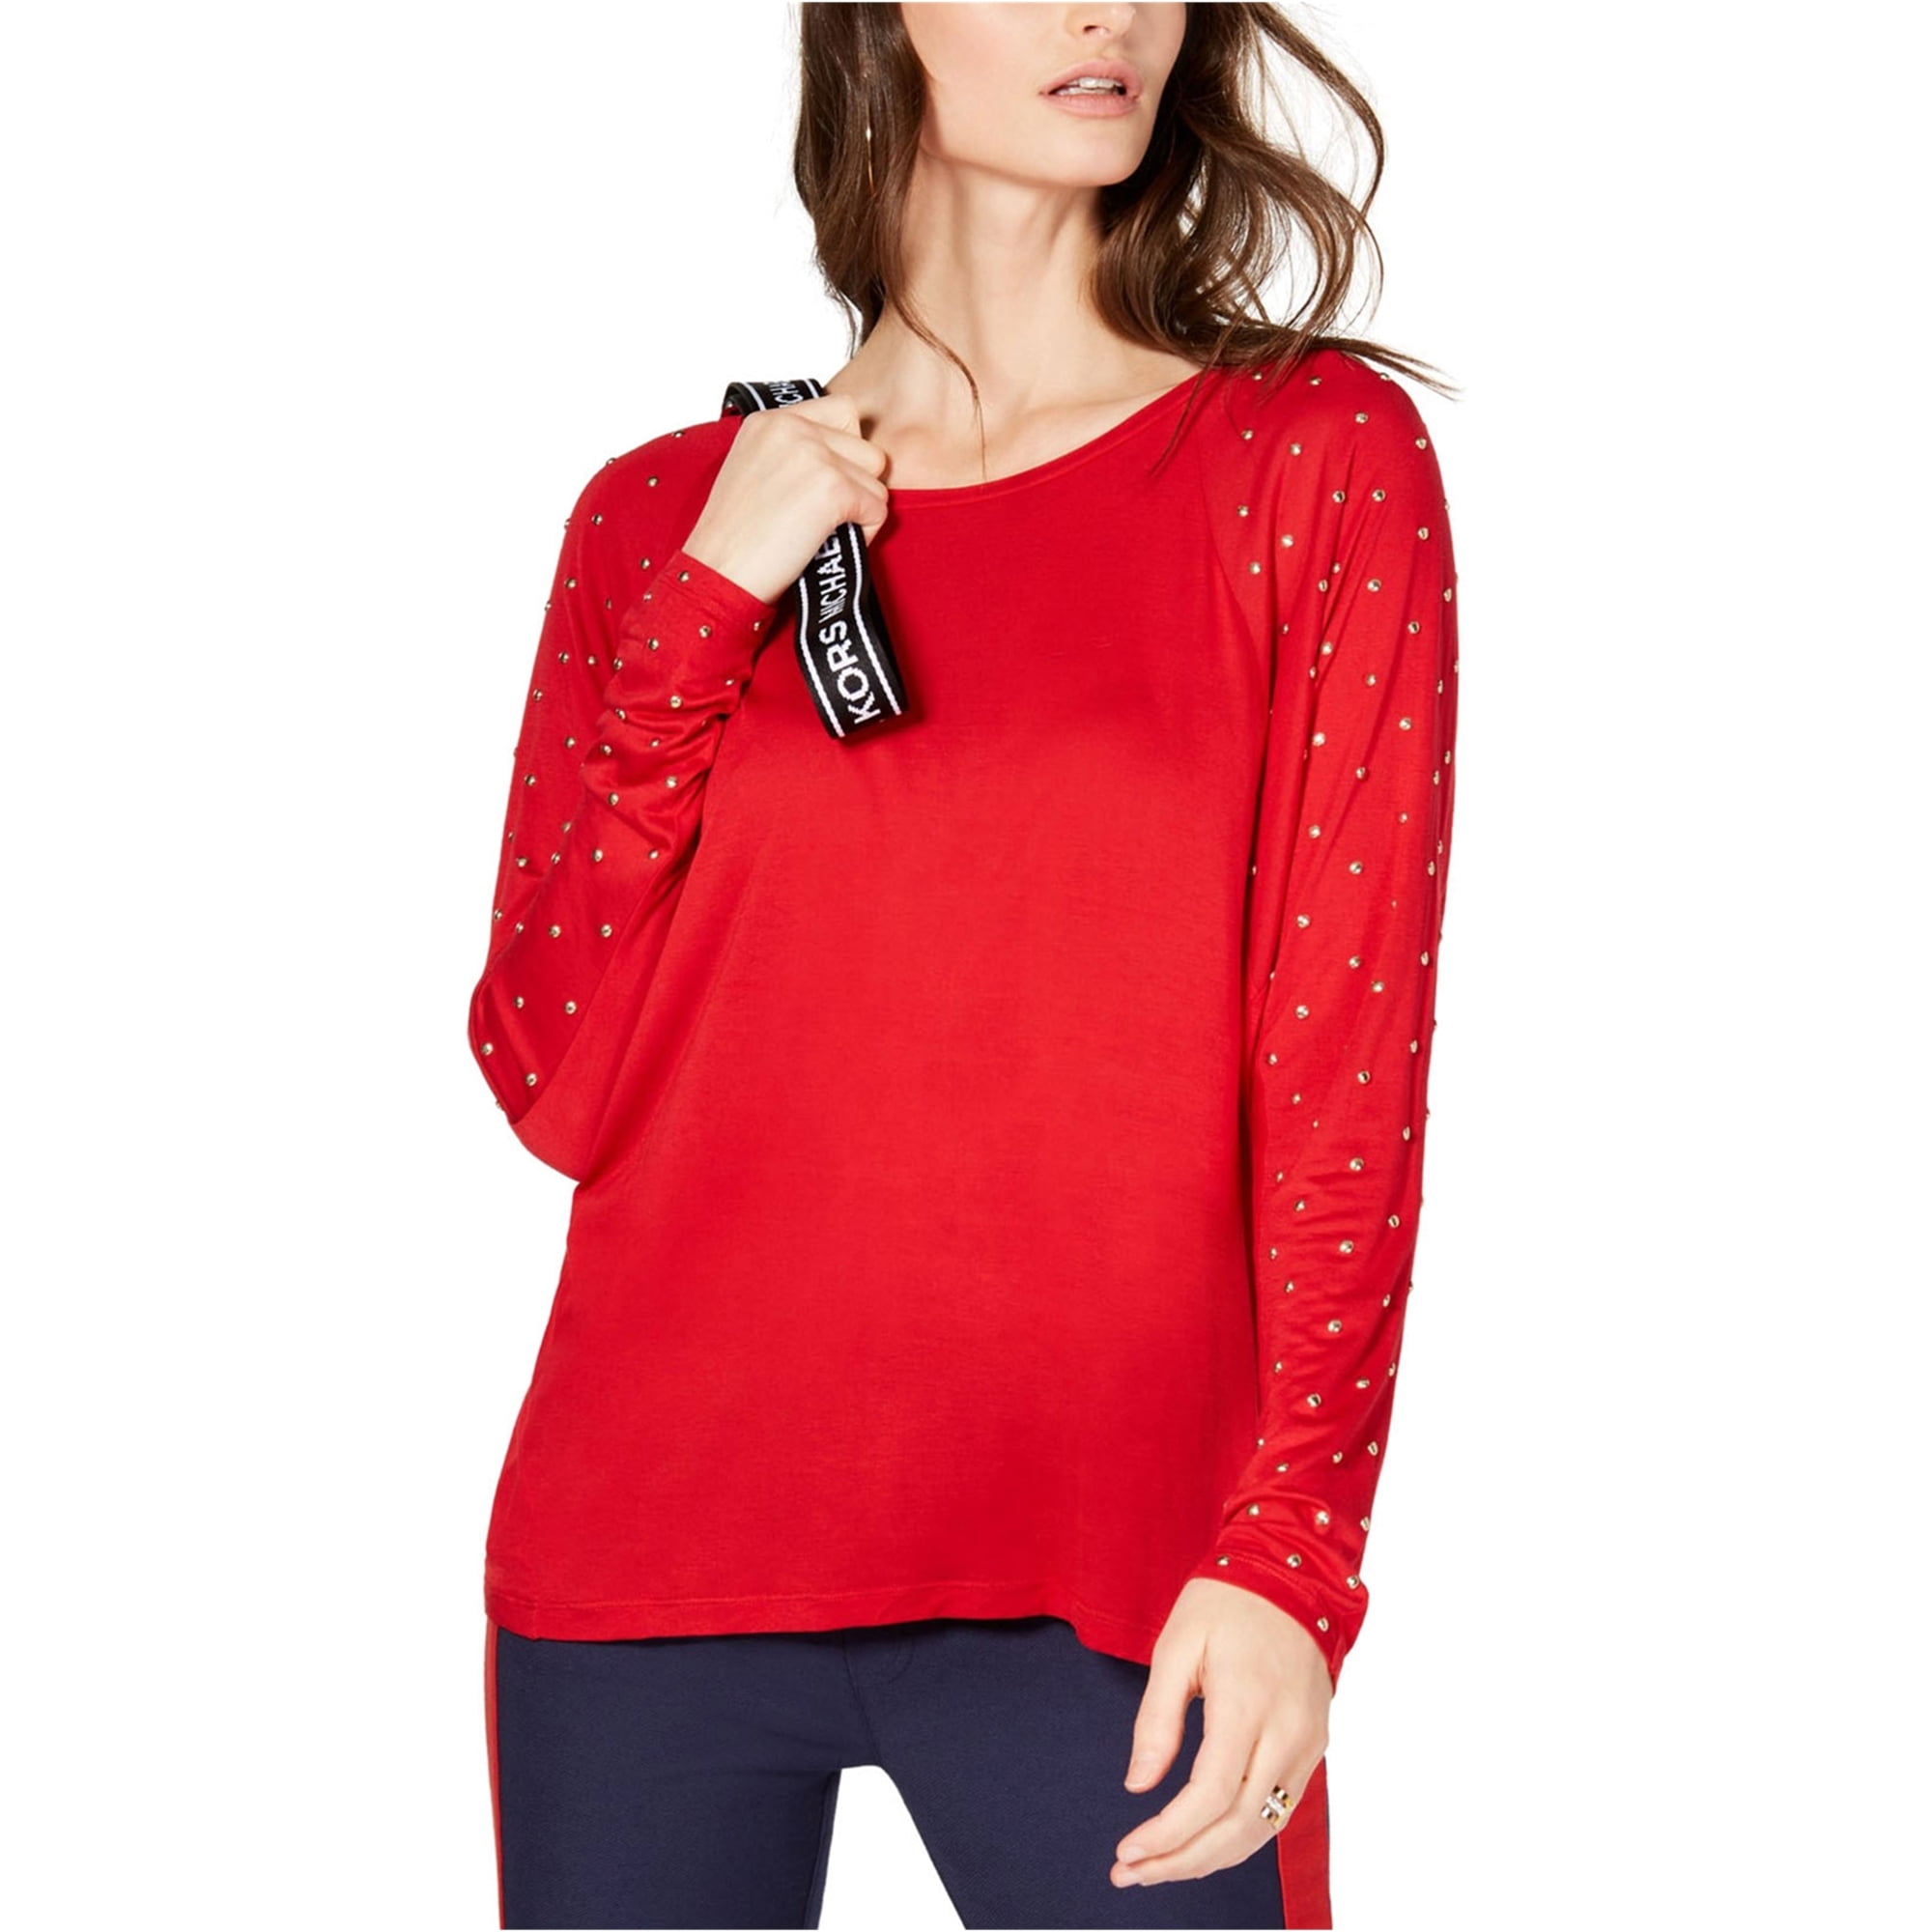 Michael Kors Womens Studded-Sleeve Embellished T-Shirt, Red, Large -  